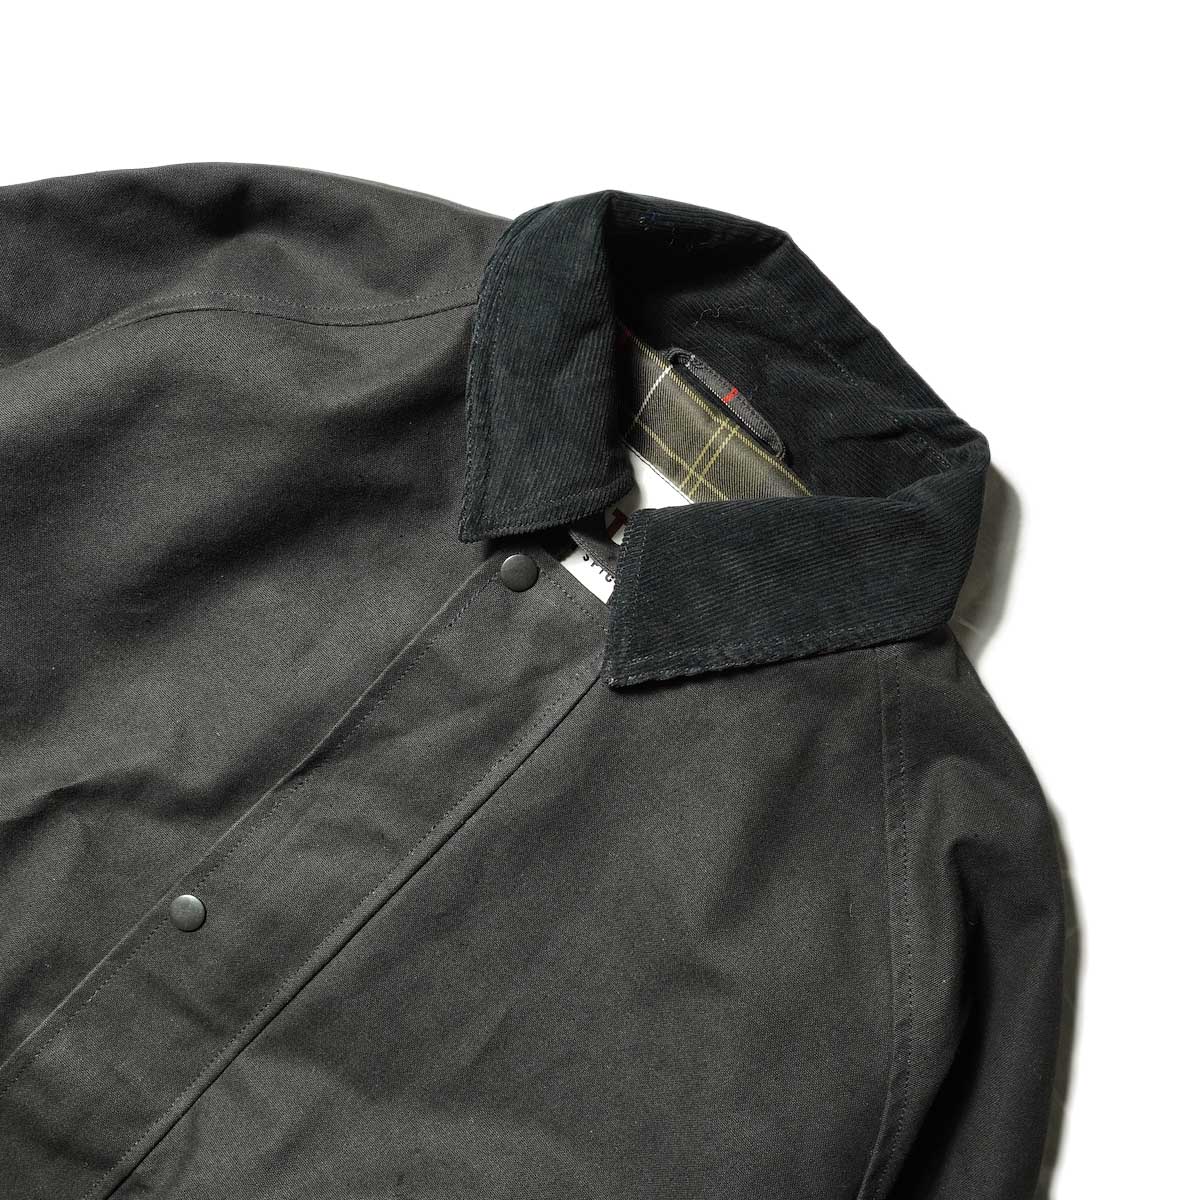 PORTRAITE / Classic Field Jacket Long - Canvas (Black)ネック